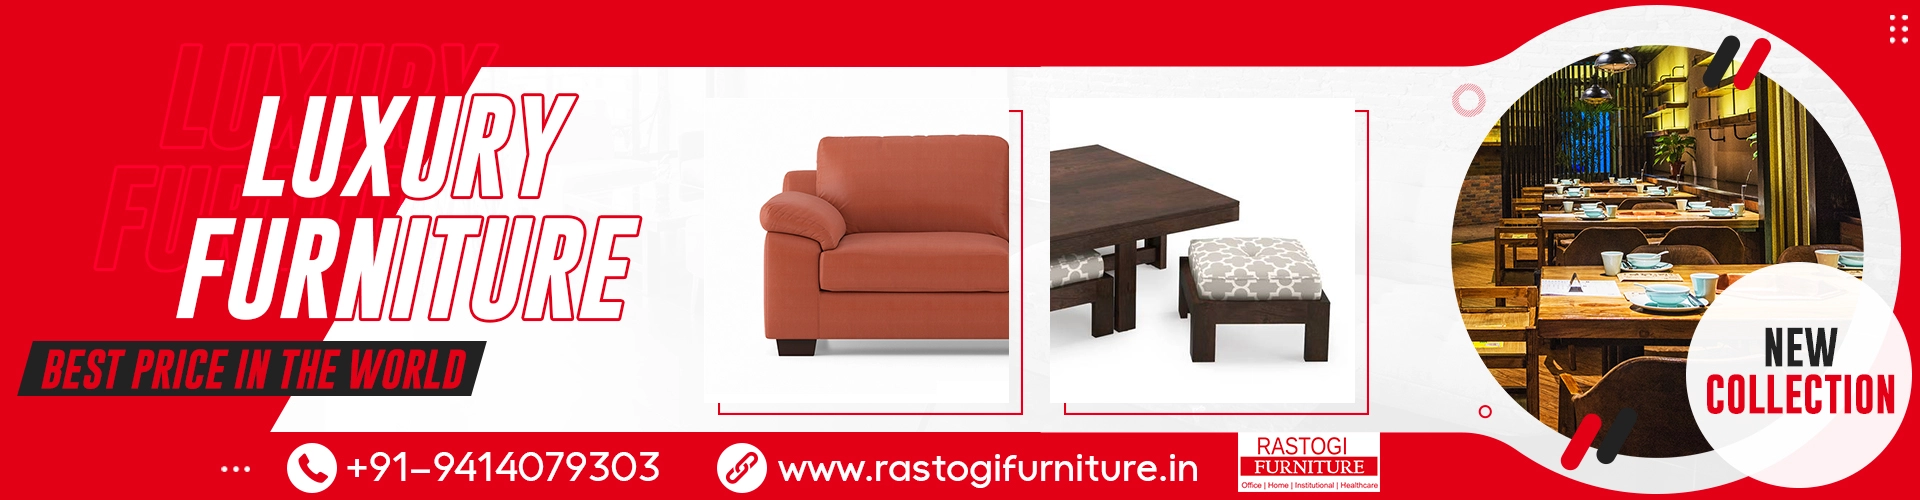 Rastogi Furniture Gallery Slider3